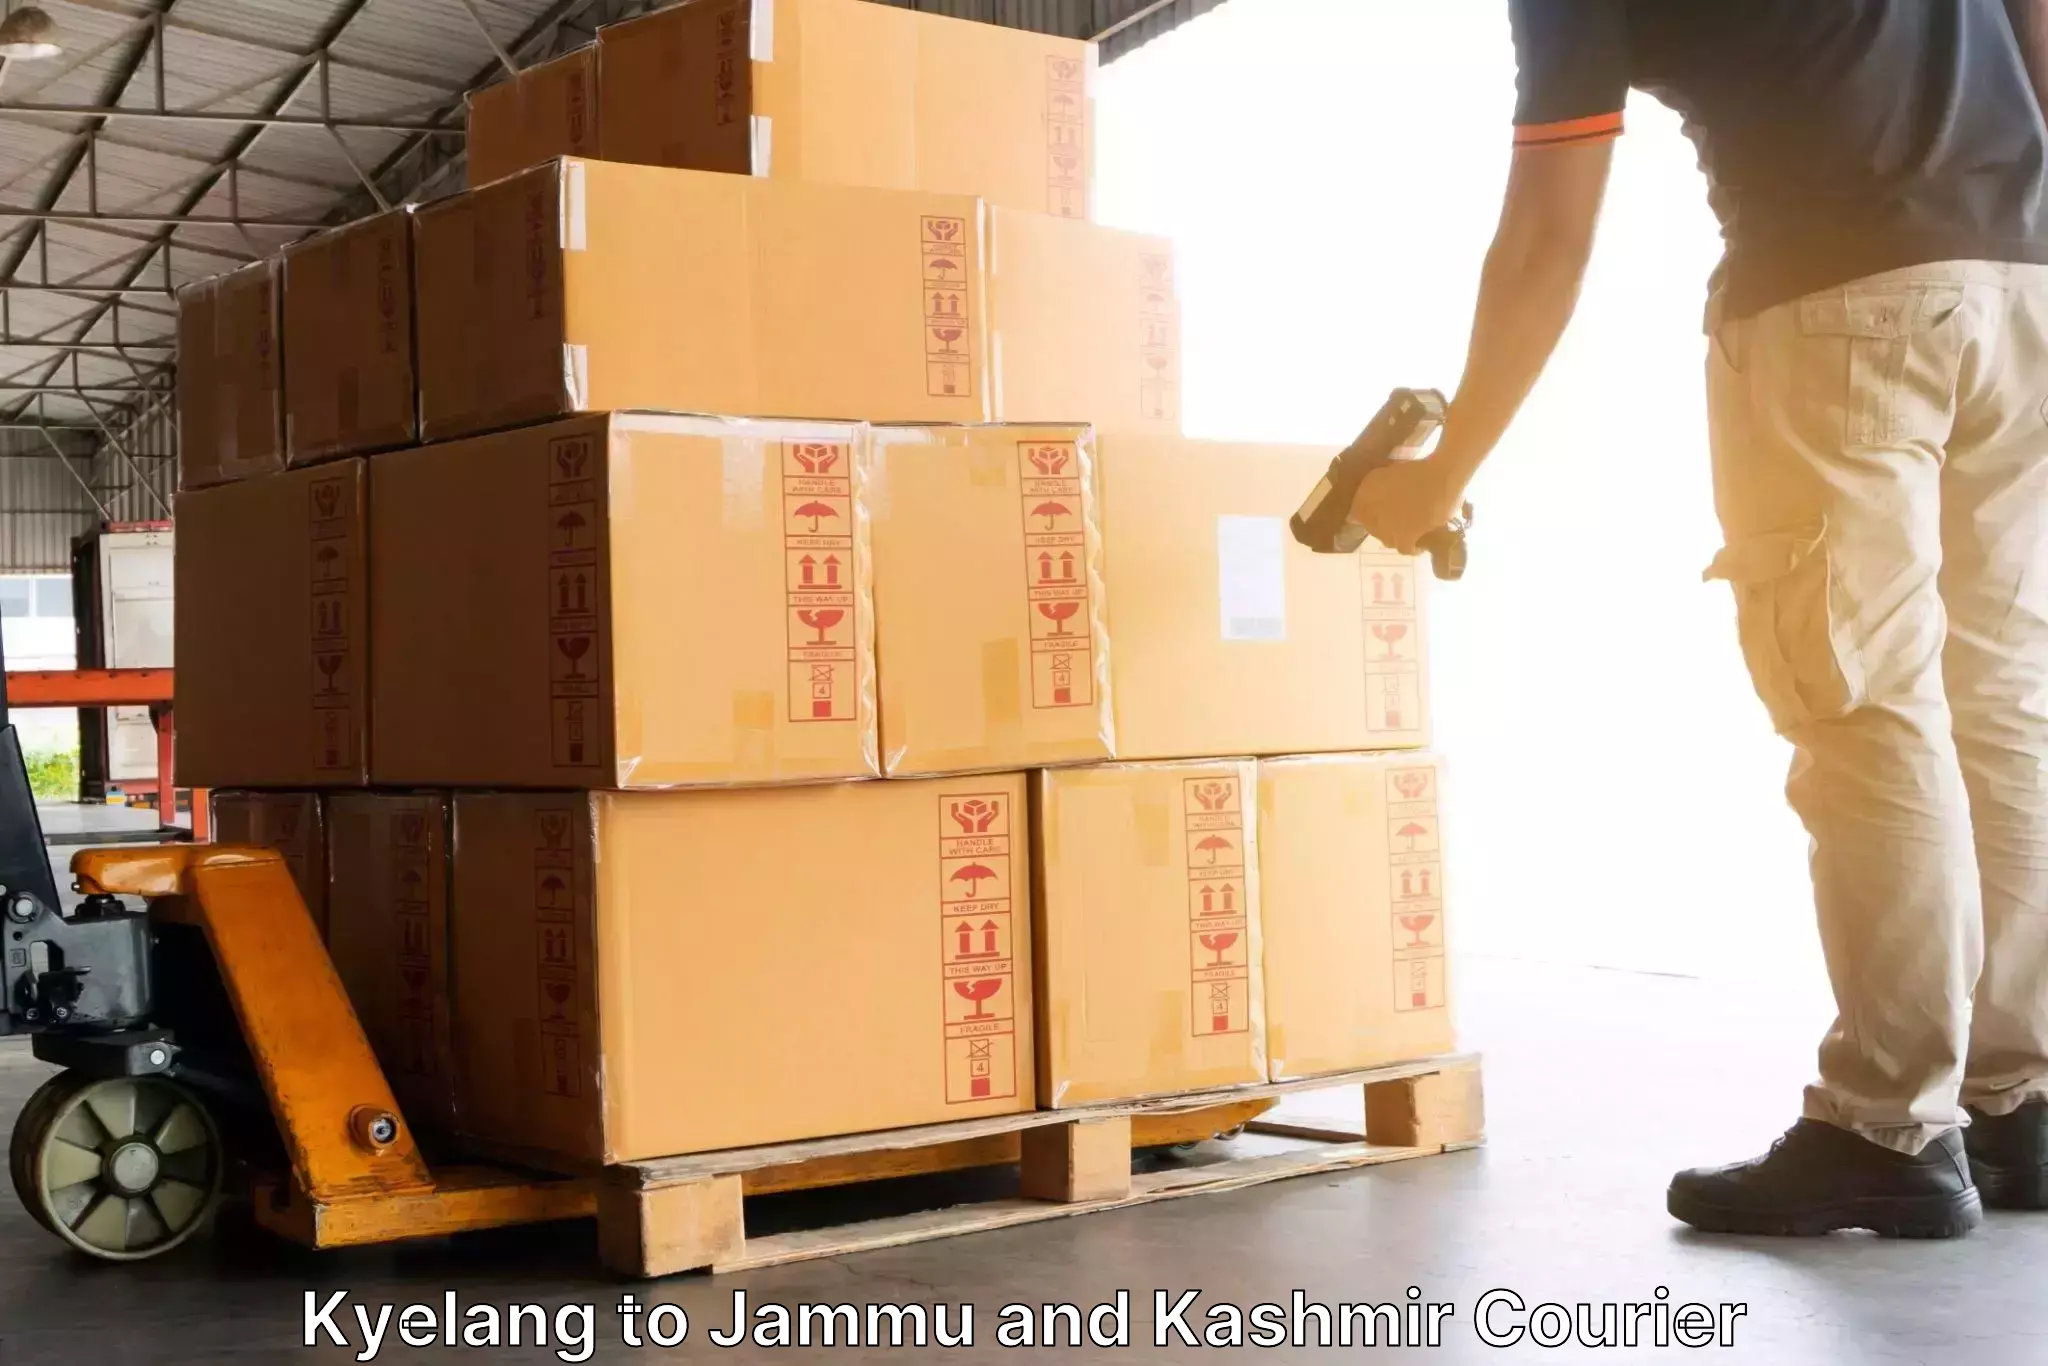 Courier service partnerships Kyelang to Srinagar Kashmir